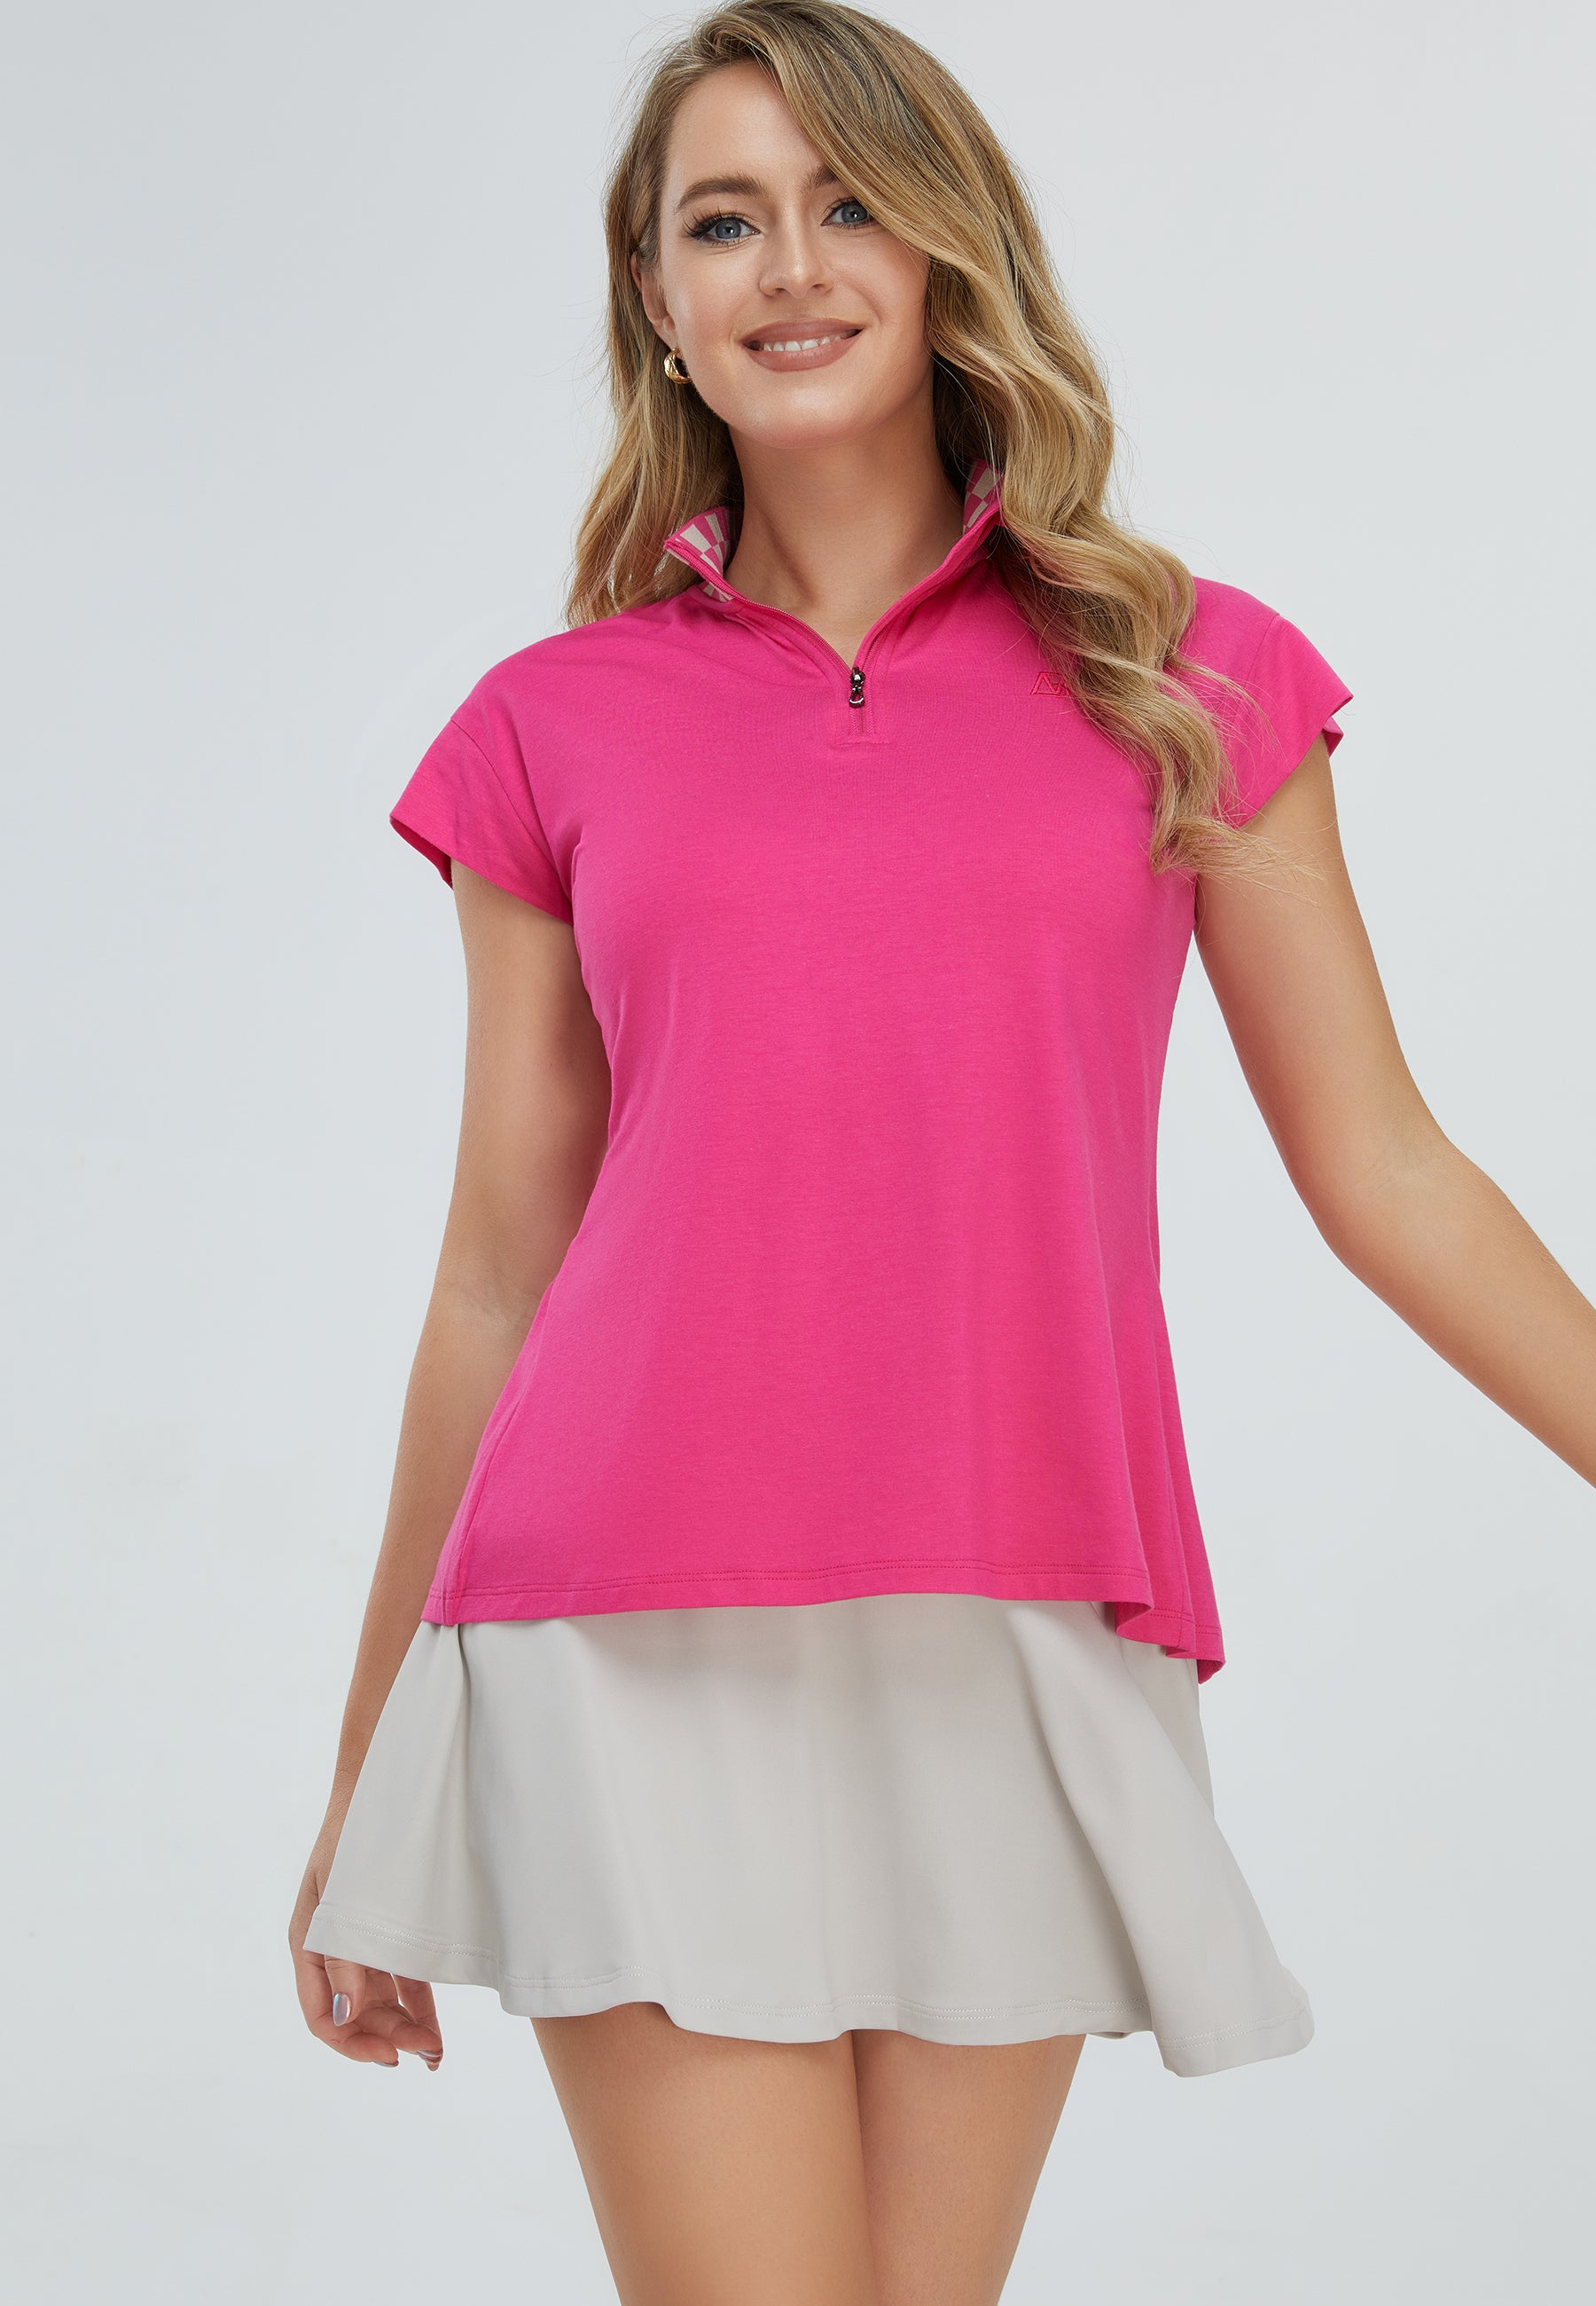 pink collared top tennis wear bellemere